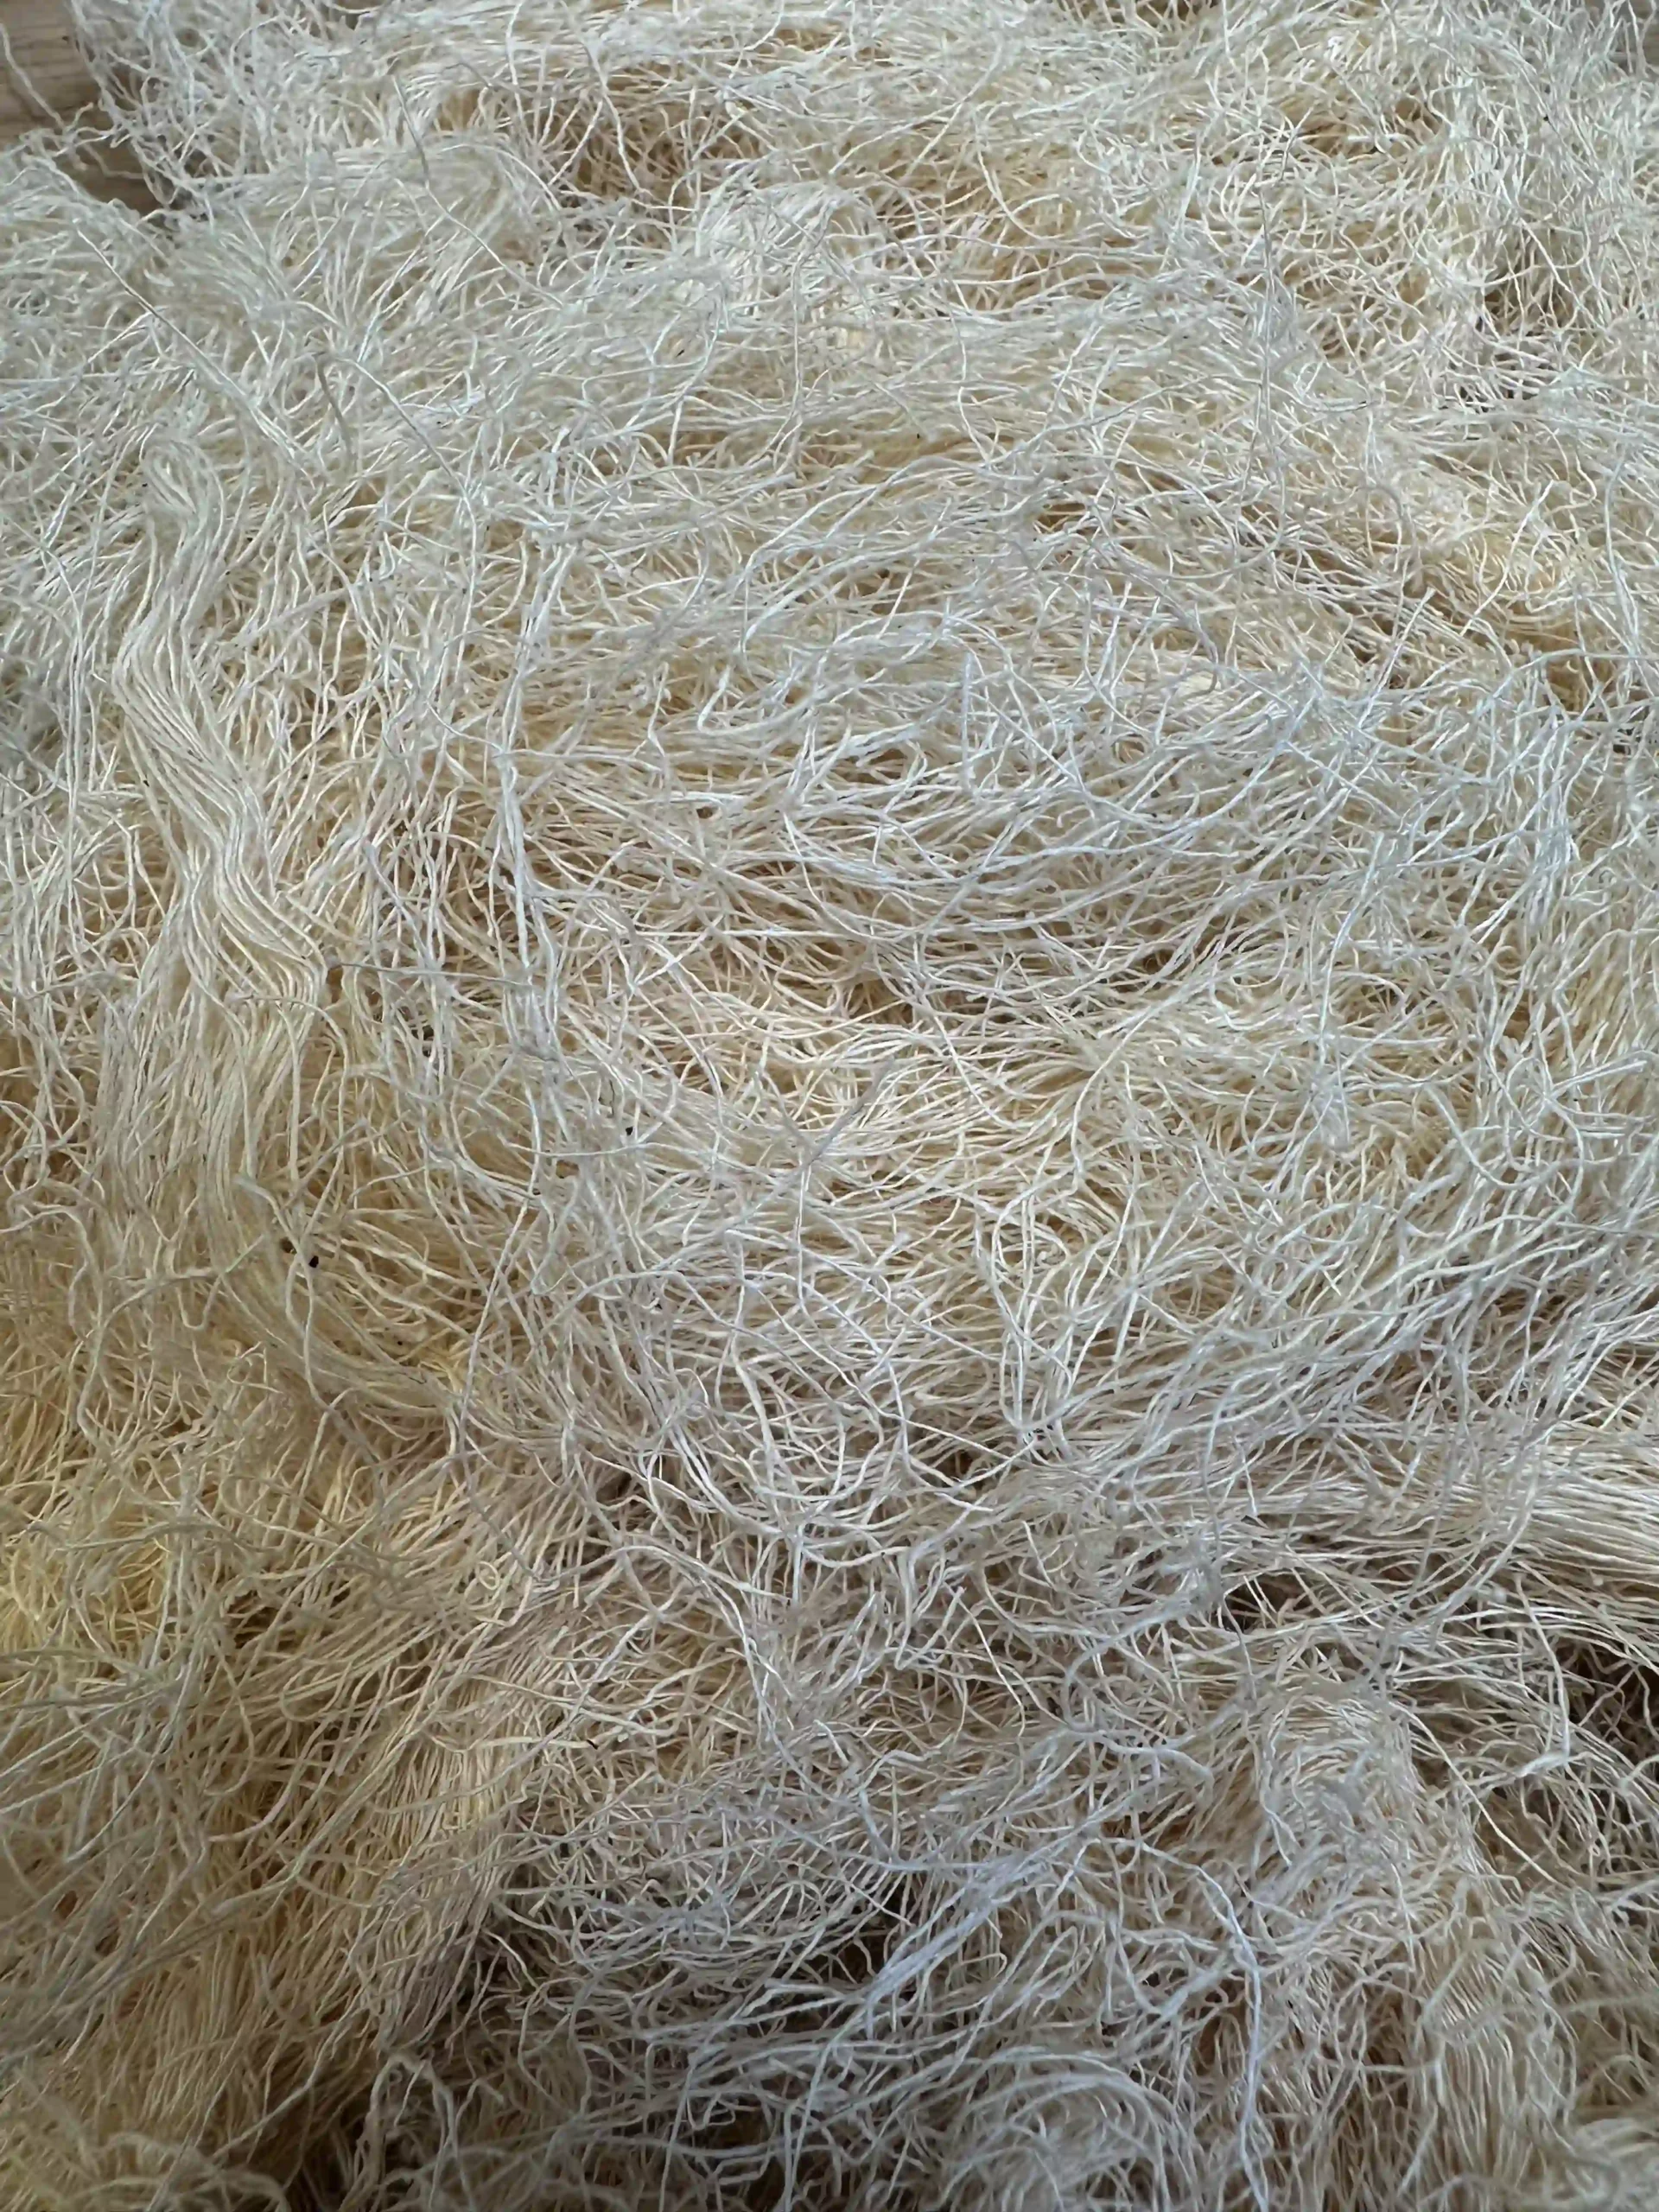 Cotton Yarn Waste (Fabric) - WasteBase